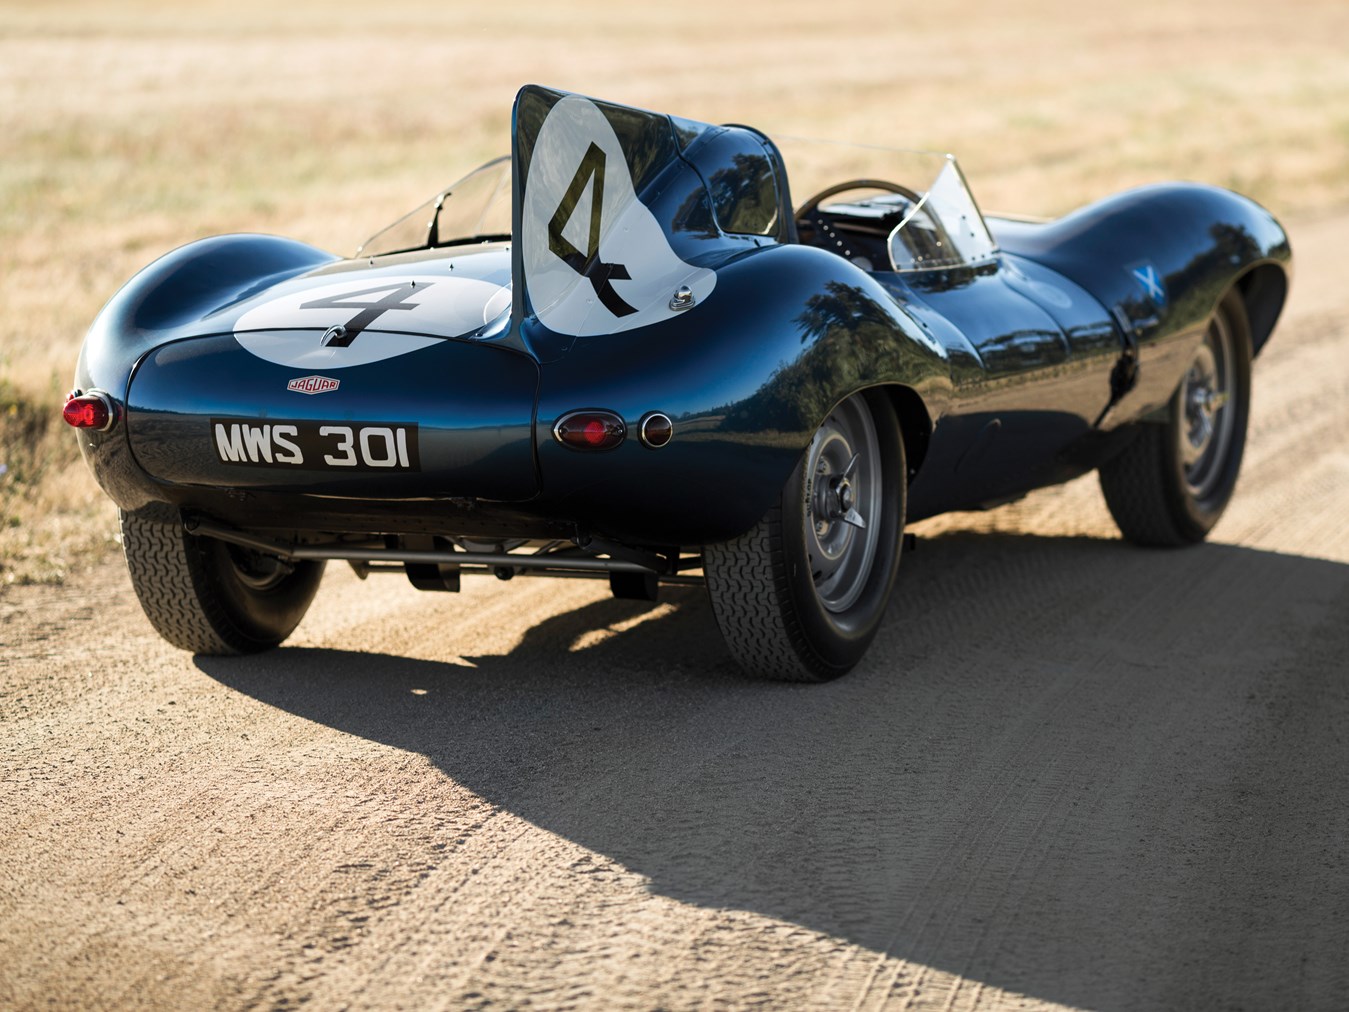 Le Mans Winning Jaguar DType Sets Record Price for British Cars Sold